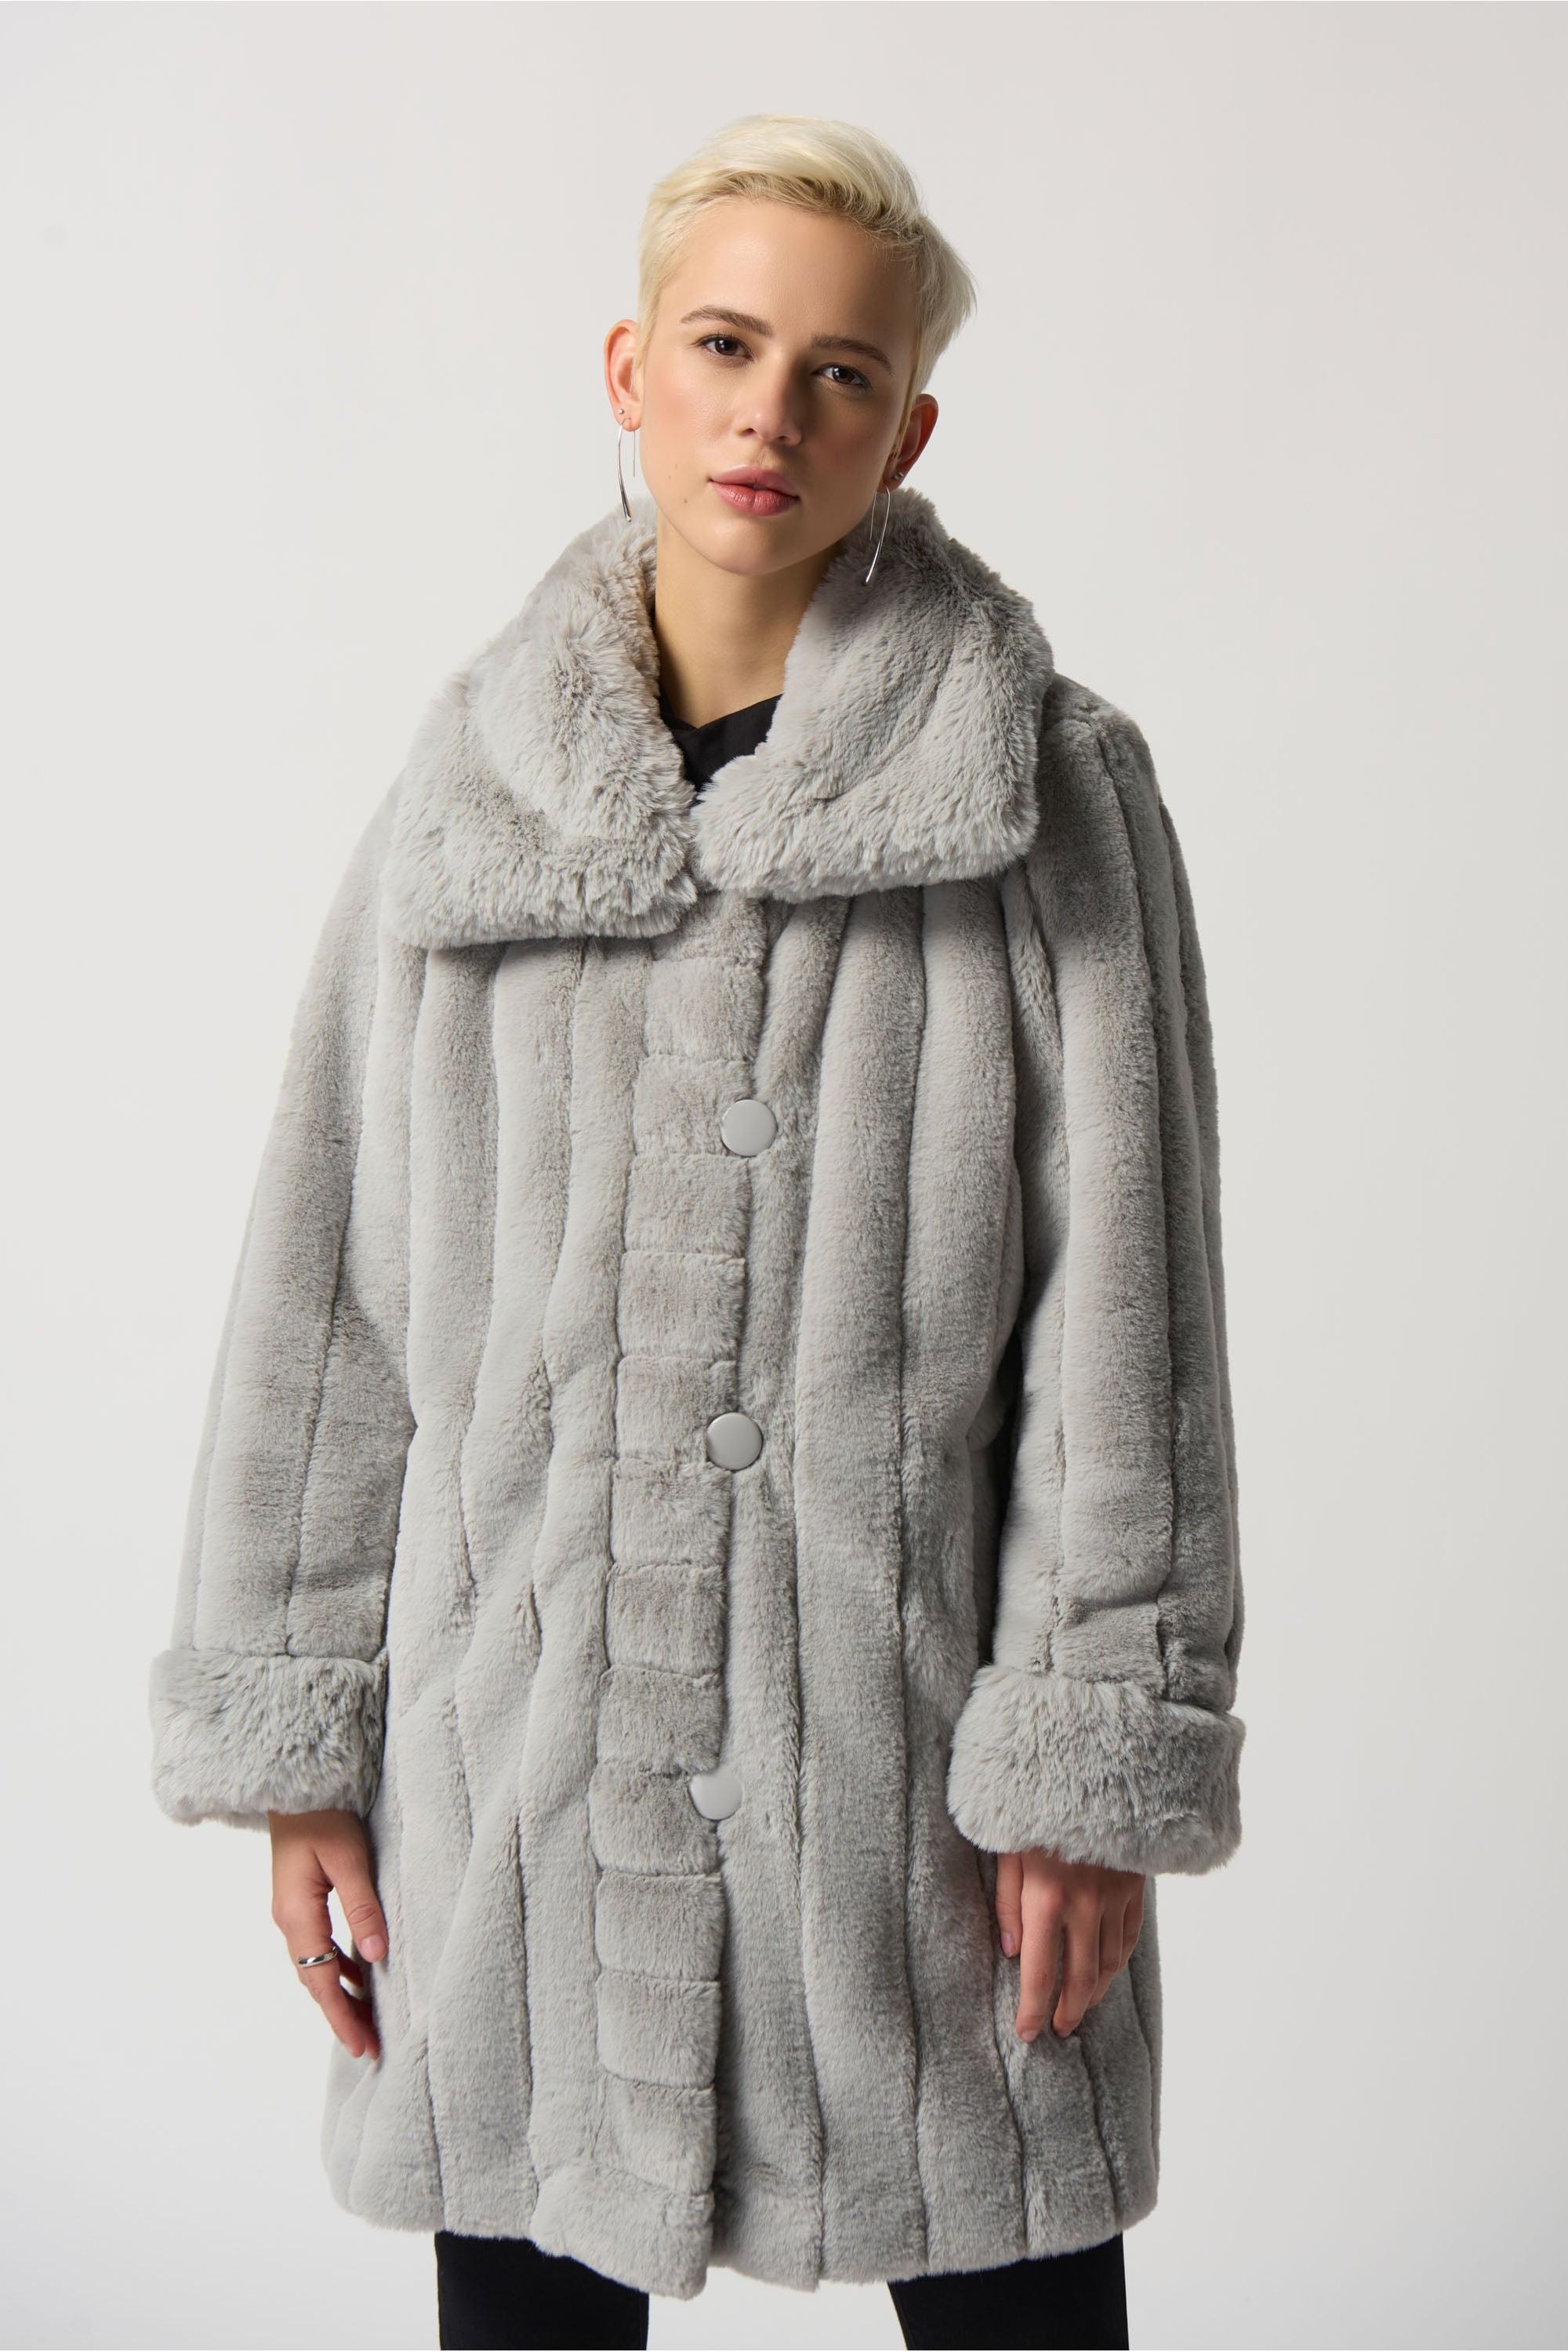 Joseph Ribkoff Faux Fur Reversible Puffer Coat - Style 233900, front, silver